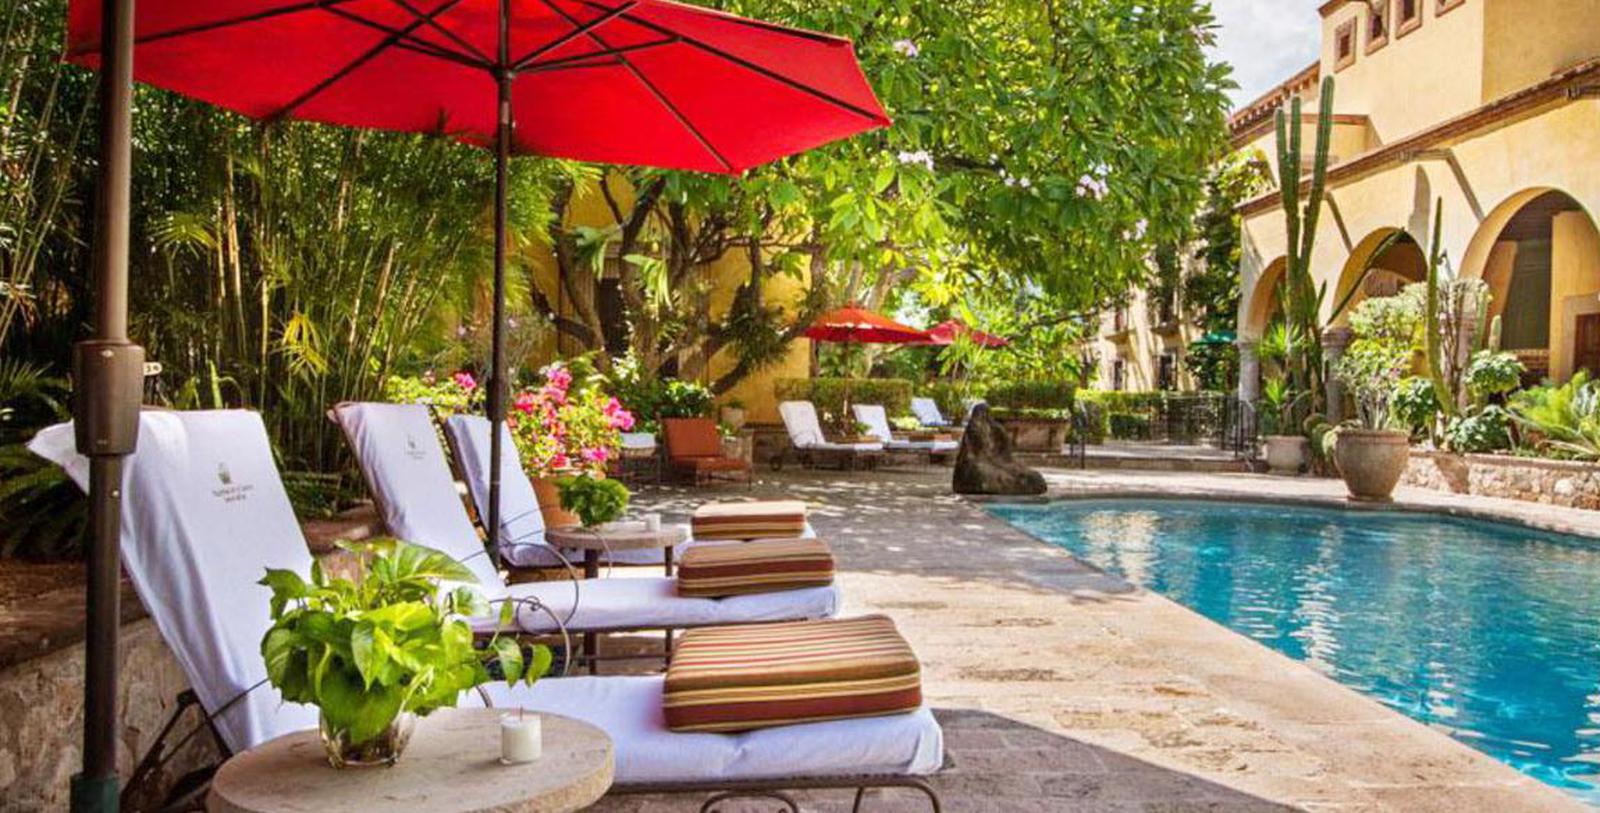 Image of Outdoor Pool & Lounge Chairs, Hacienda de los Santos, Alamos, Mexico, 1600s, Member of Historic Hotels Worldwide, Hot Deals